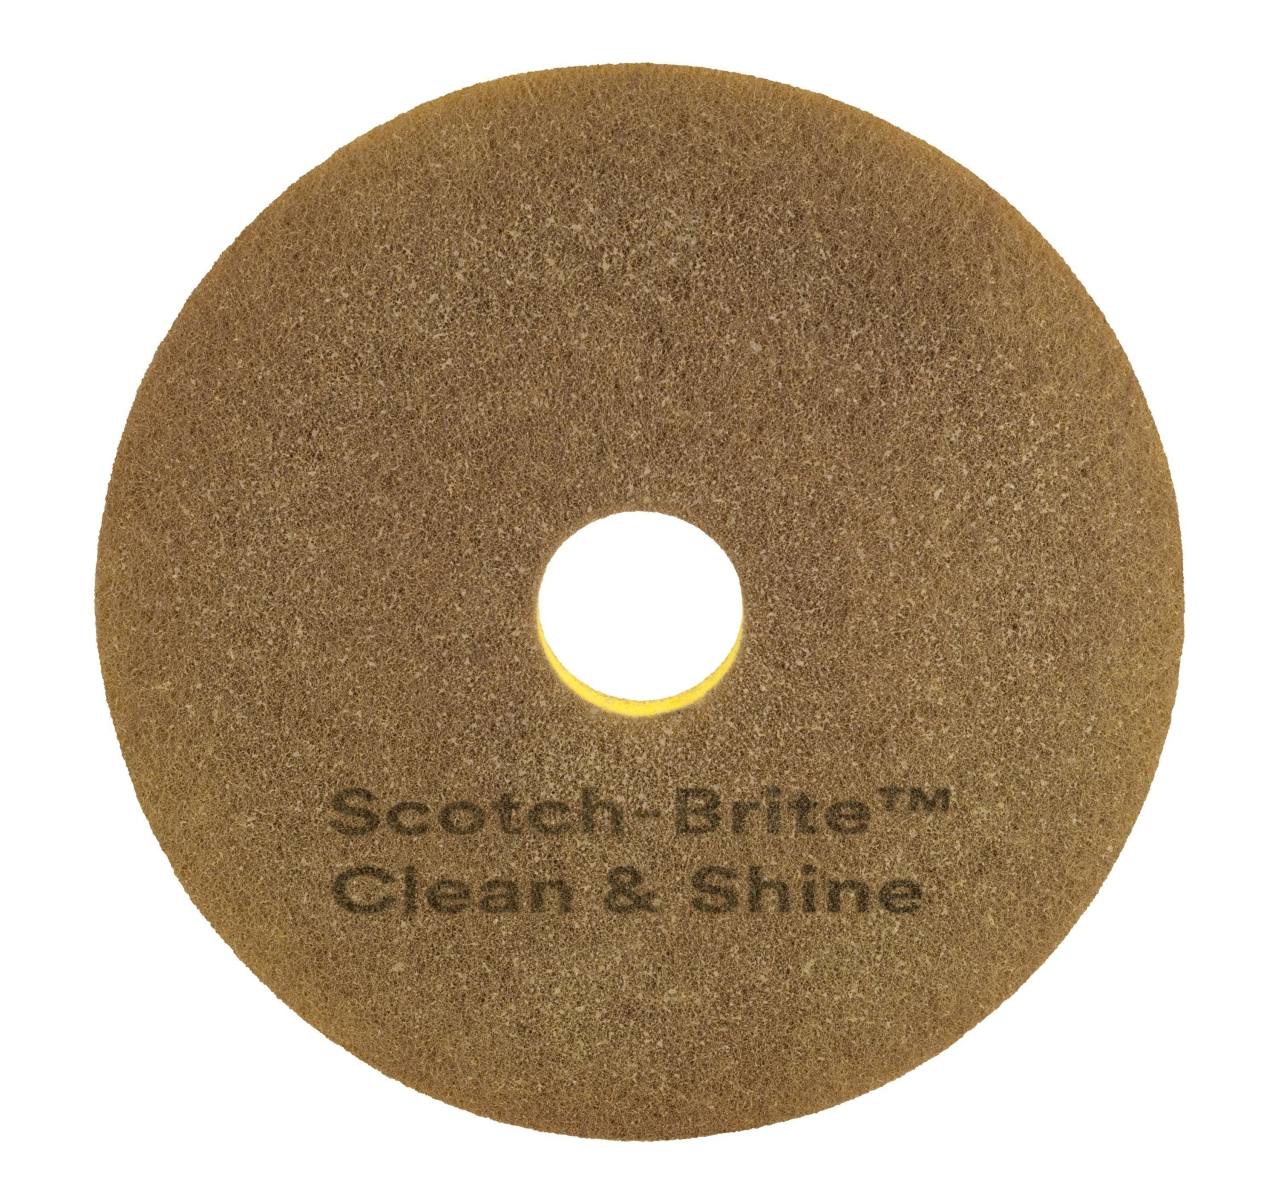 3M Scotch-Brite Clean & Shine Maschinenpad, 430 mm, 5 Stück / Karton